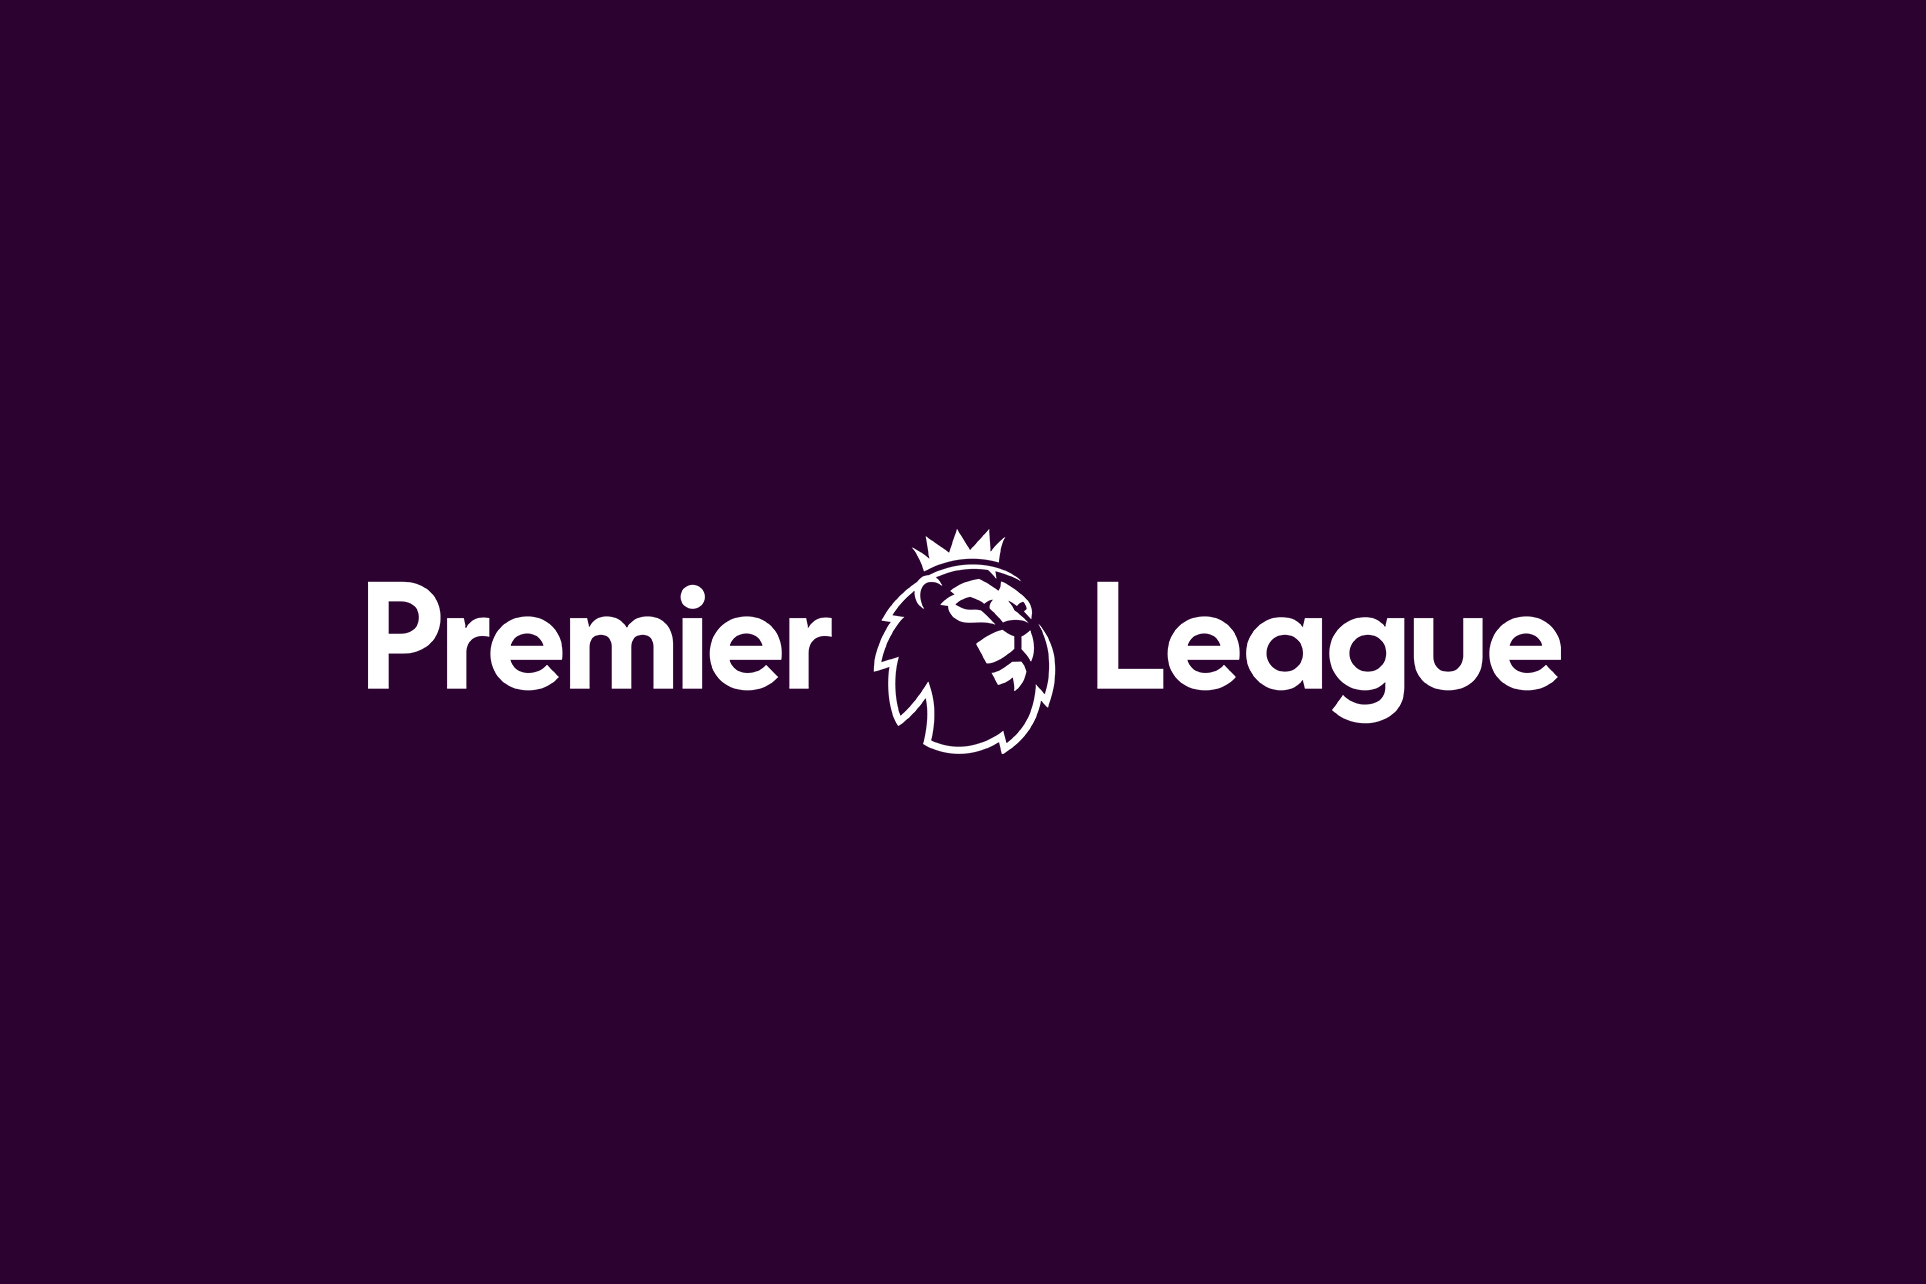 Премьершип. Premier League. Англия премьер лига. EPL логотип. Premier League logo.